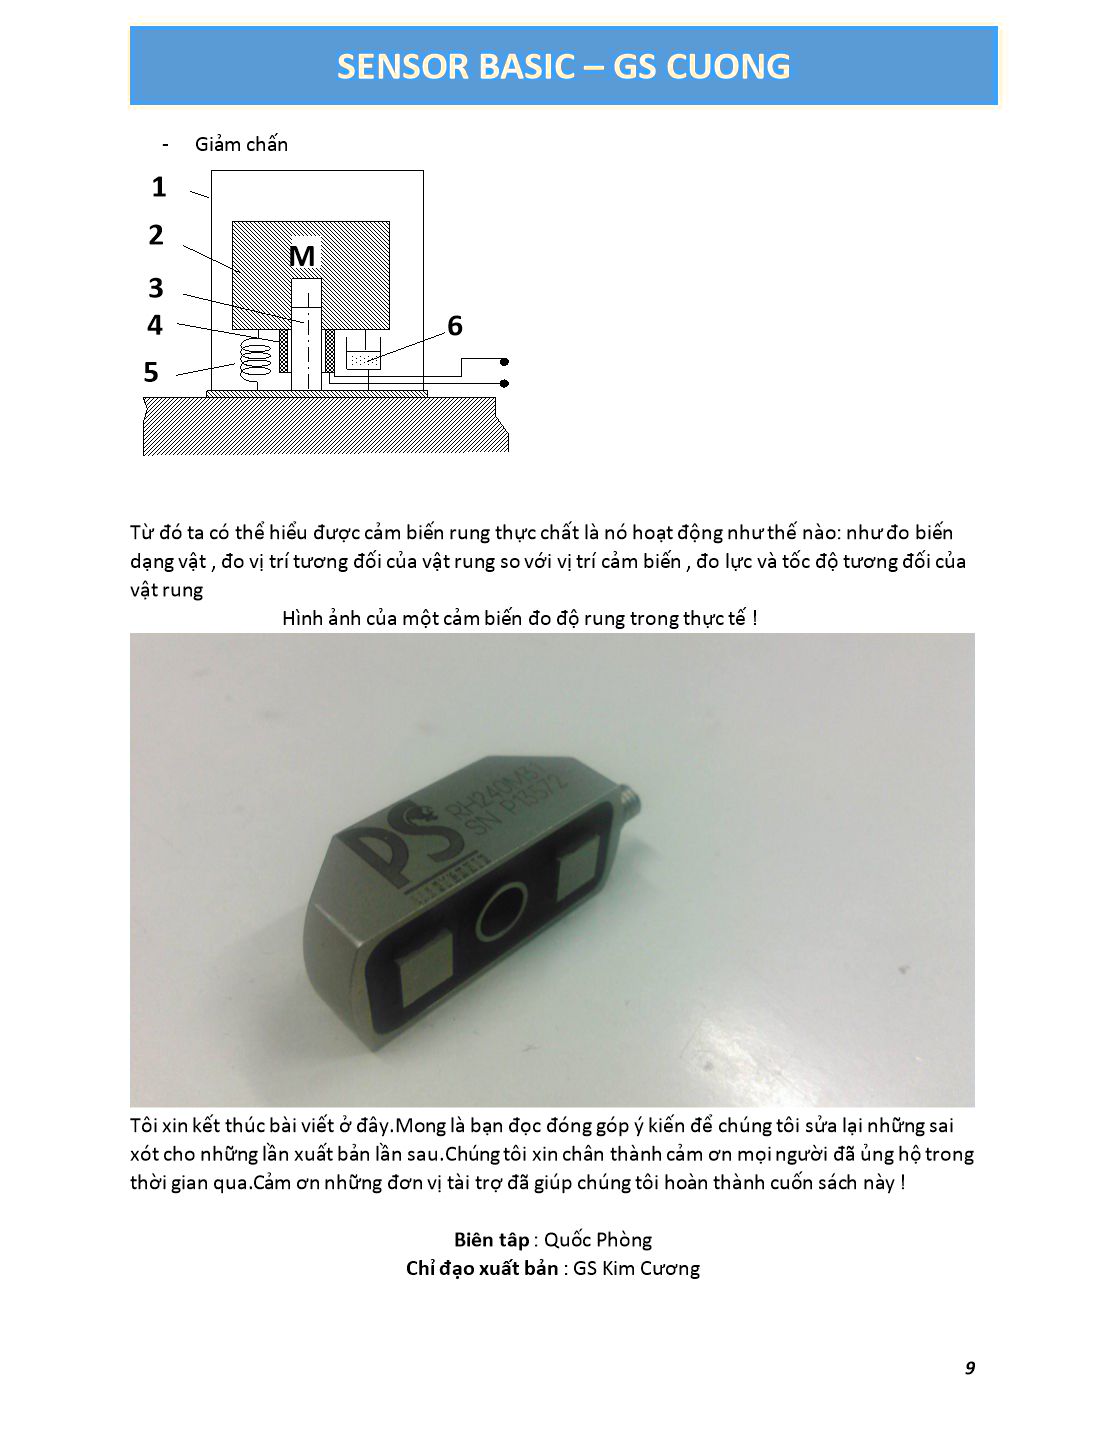 Tài liệu Sensor basic trang 9